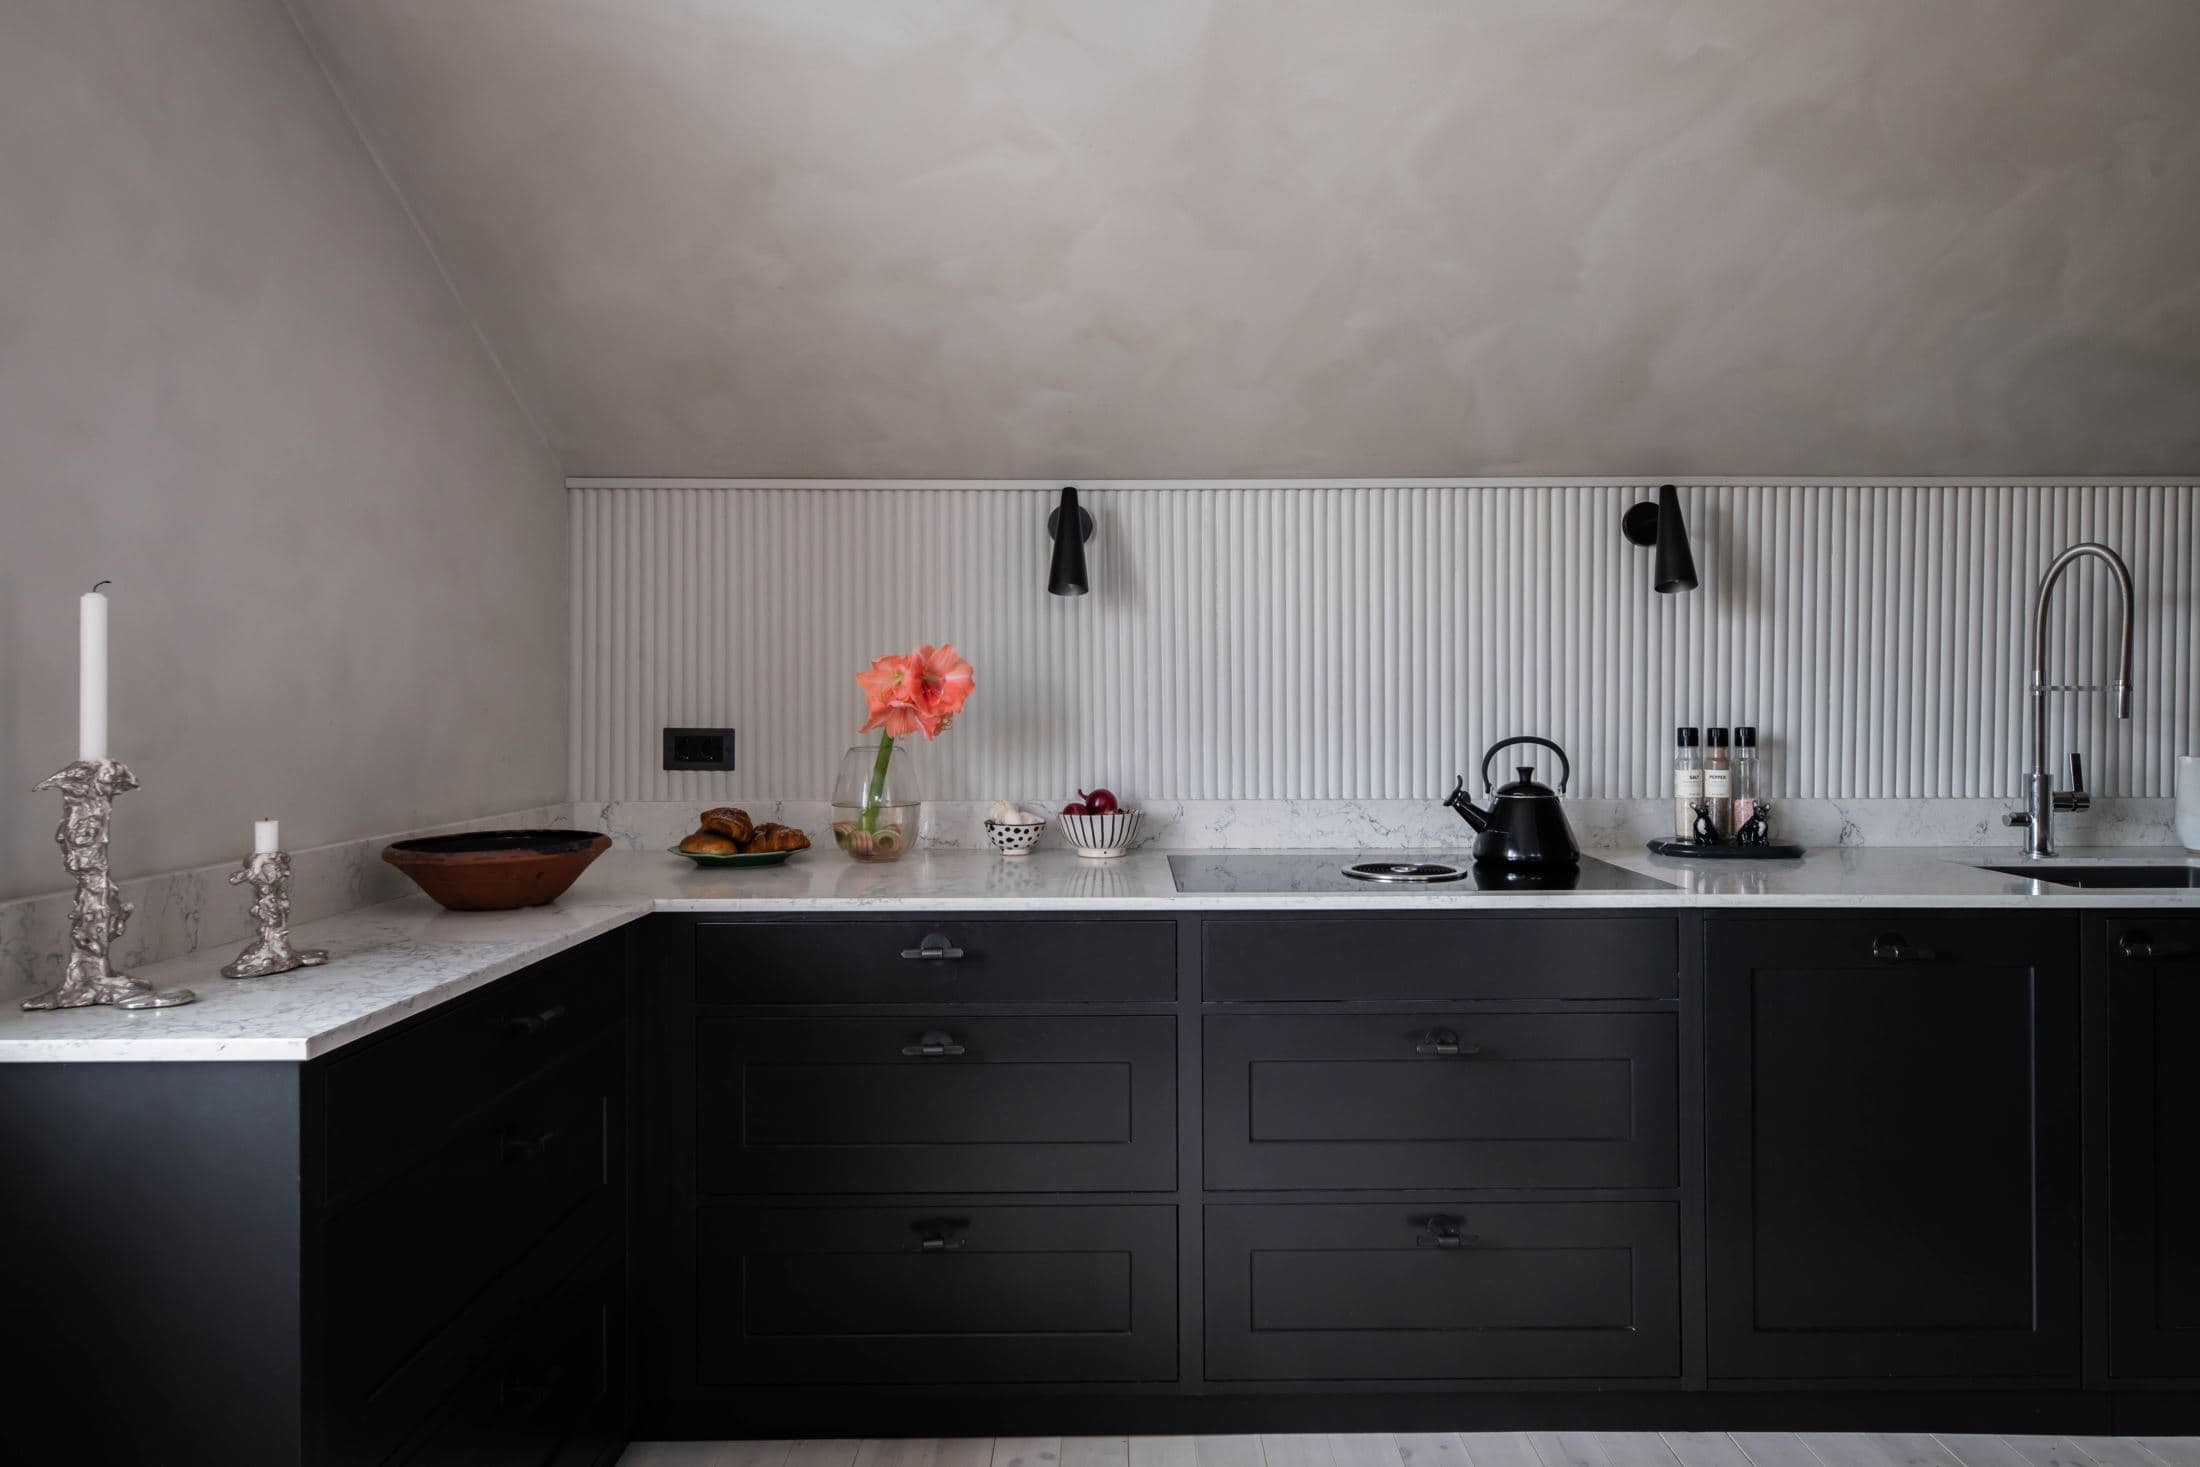 13 inspiring kitchens that pair white kitchen cabinets with black hardware  - COCO LAPINE DESIGNCOCO LAPINE DESIGN